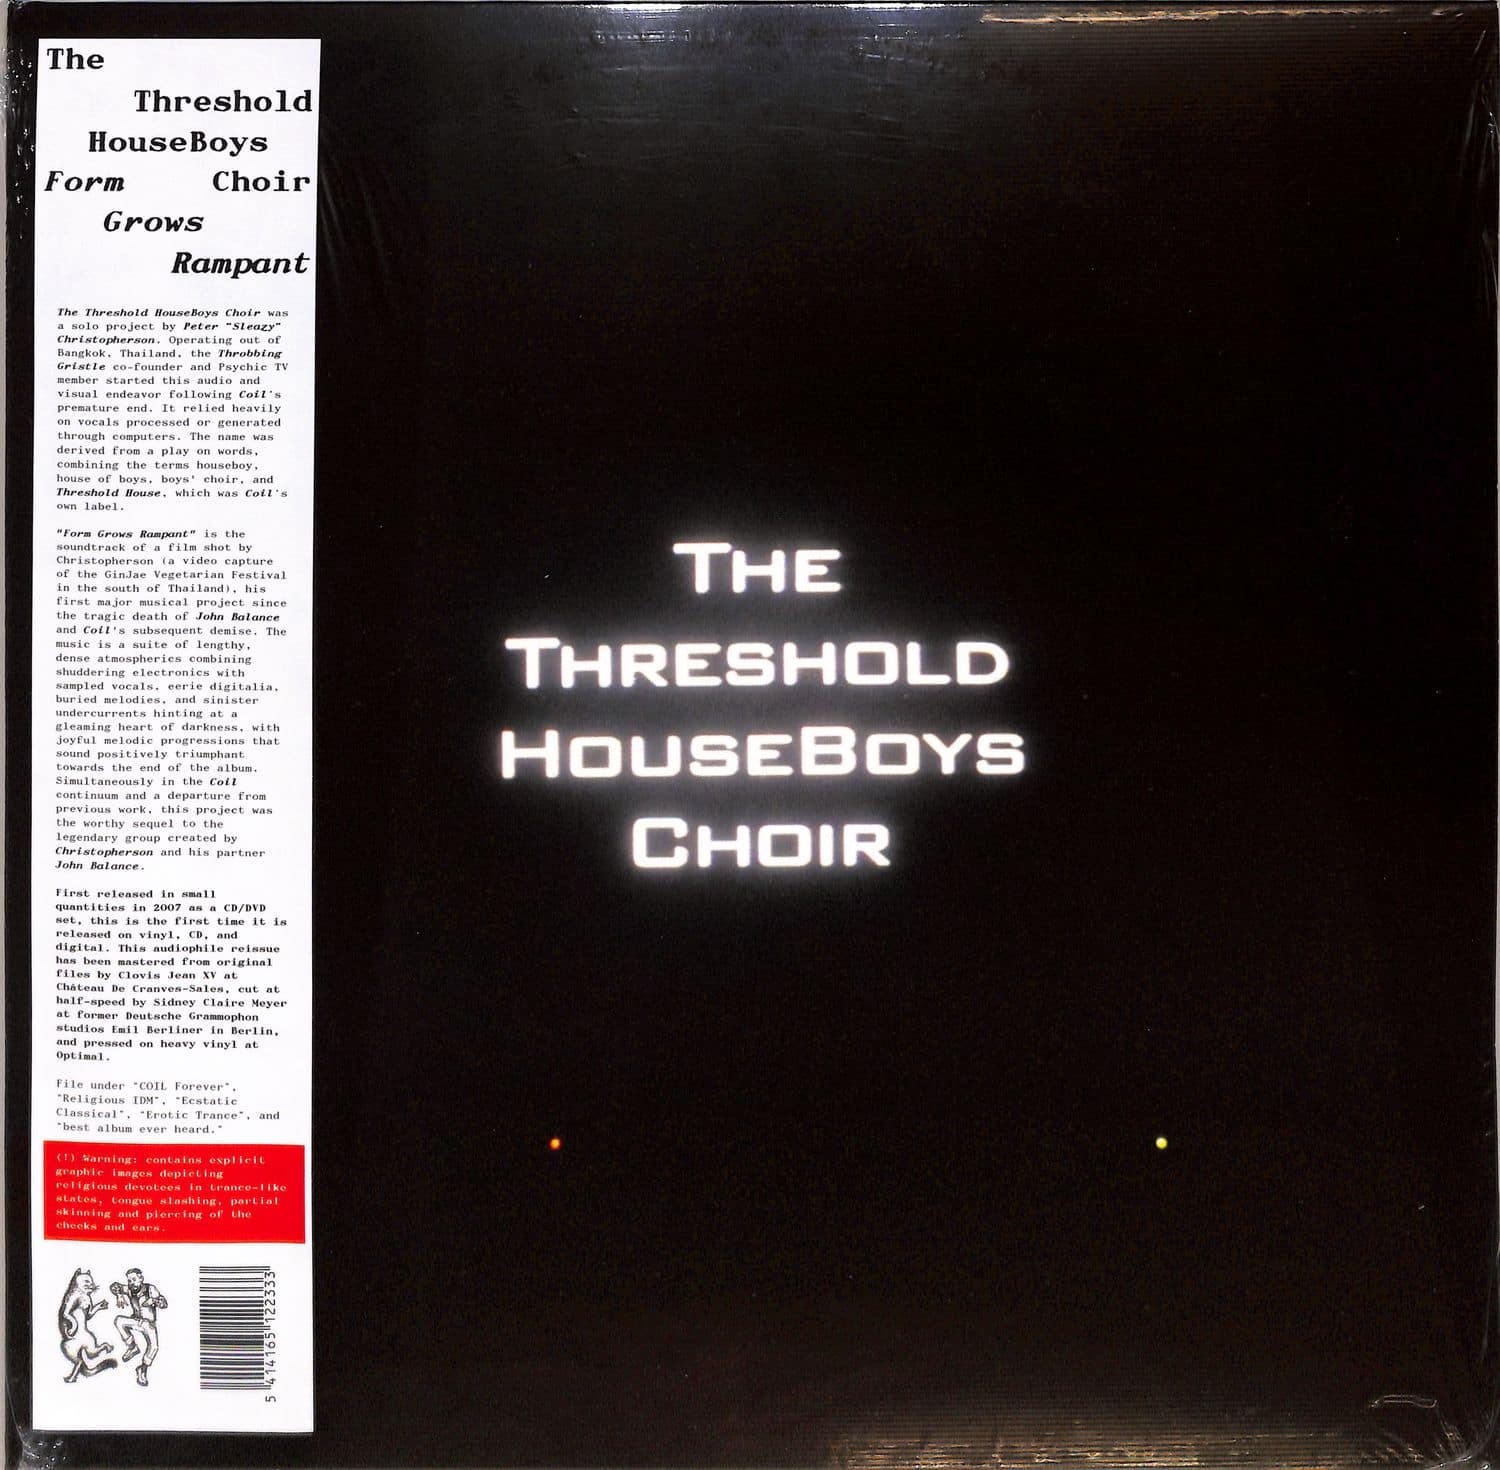 The Threshold Houseboys Choir  - FORM GROWS RAMPANT 